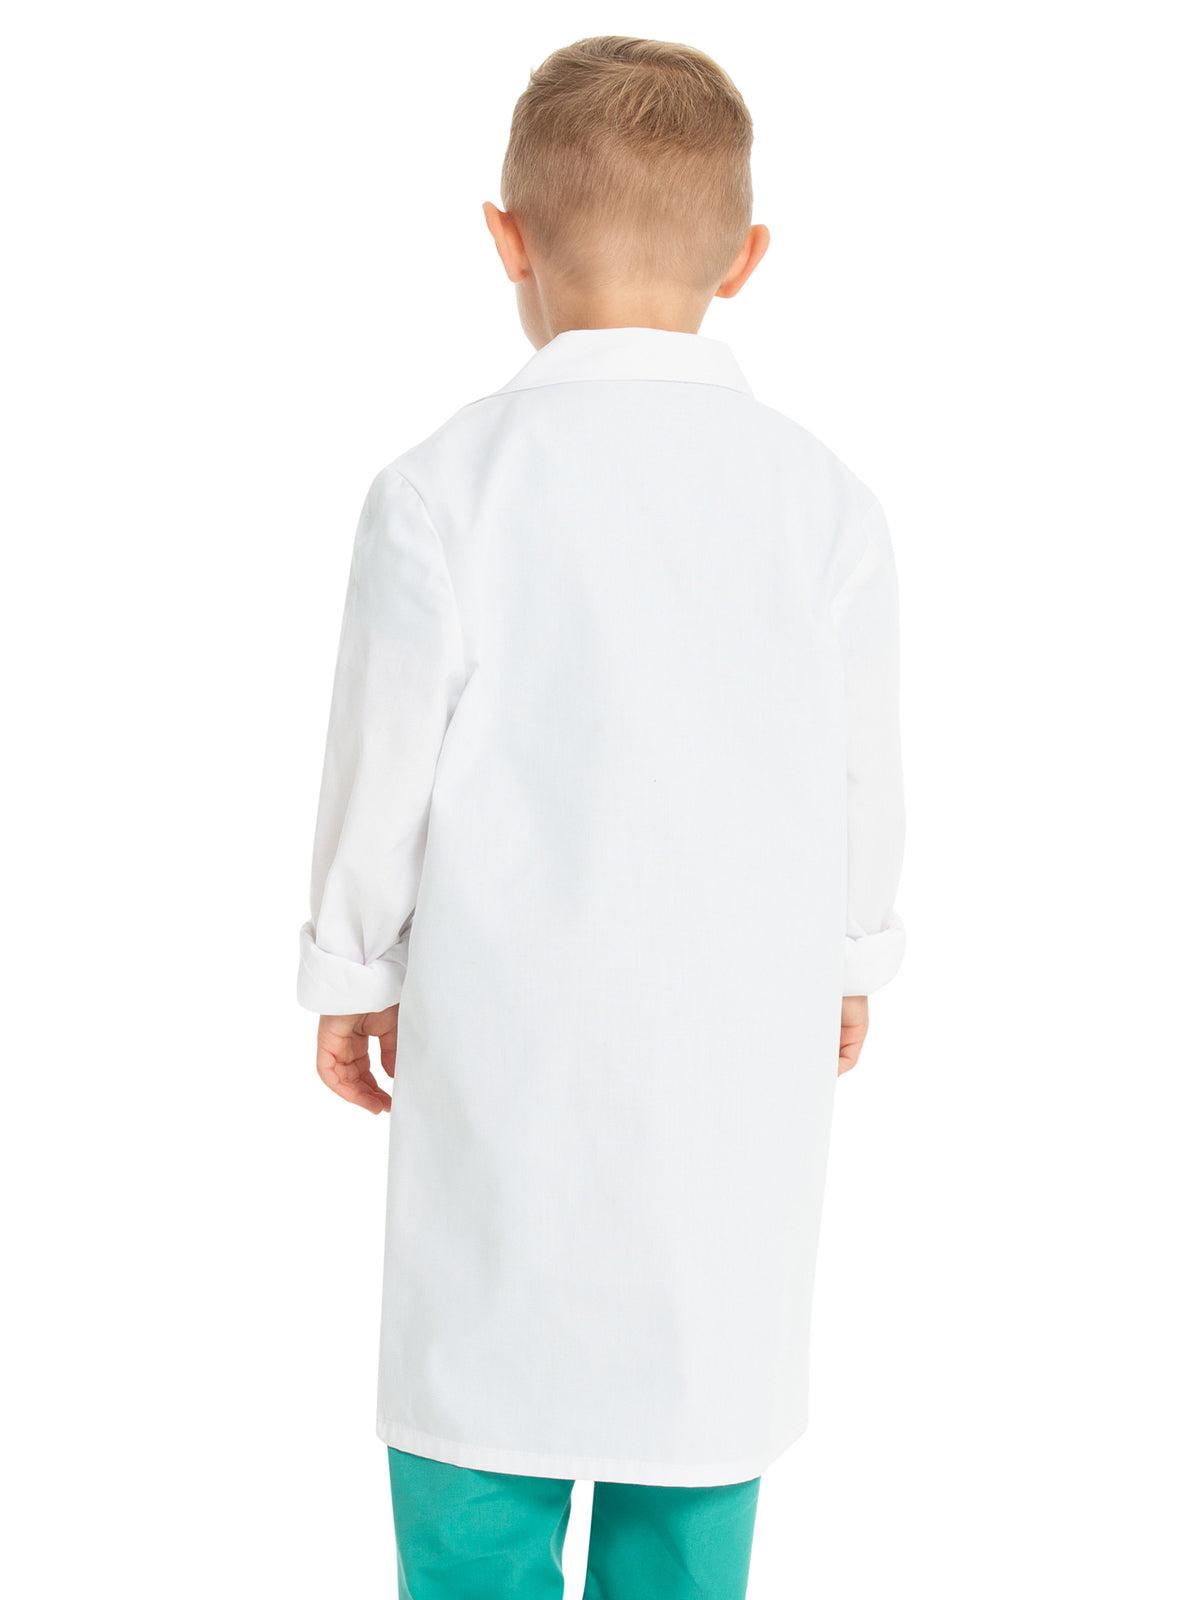 Unisex Children's Three-Pocket 26" Lab Coat - CK430 - White